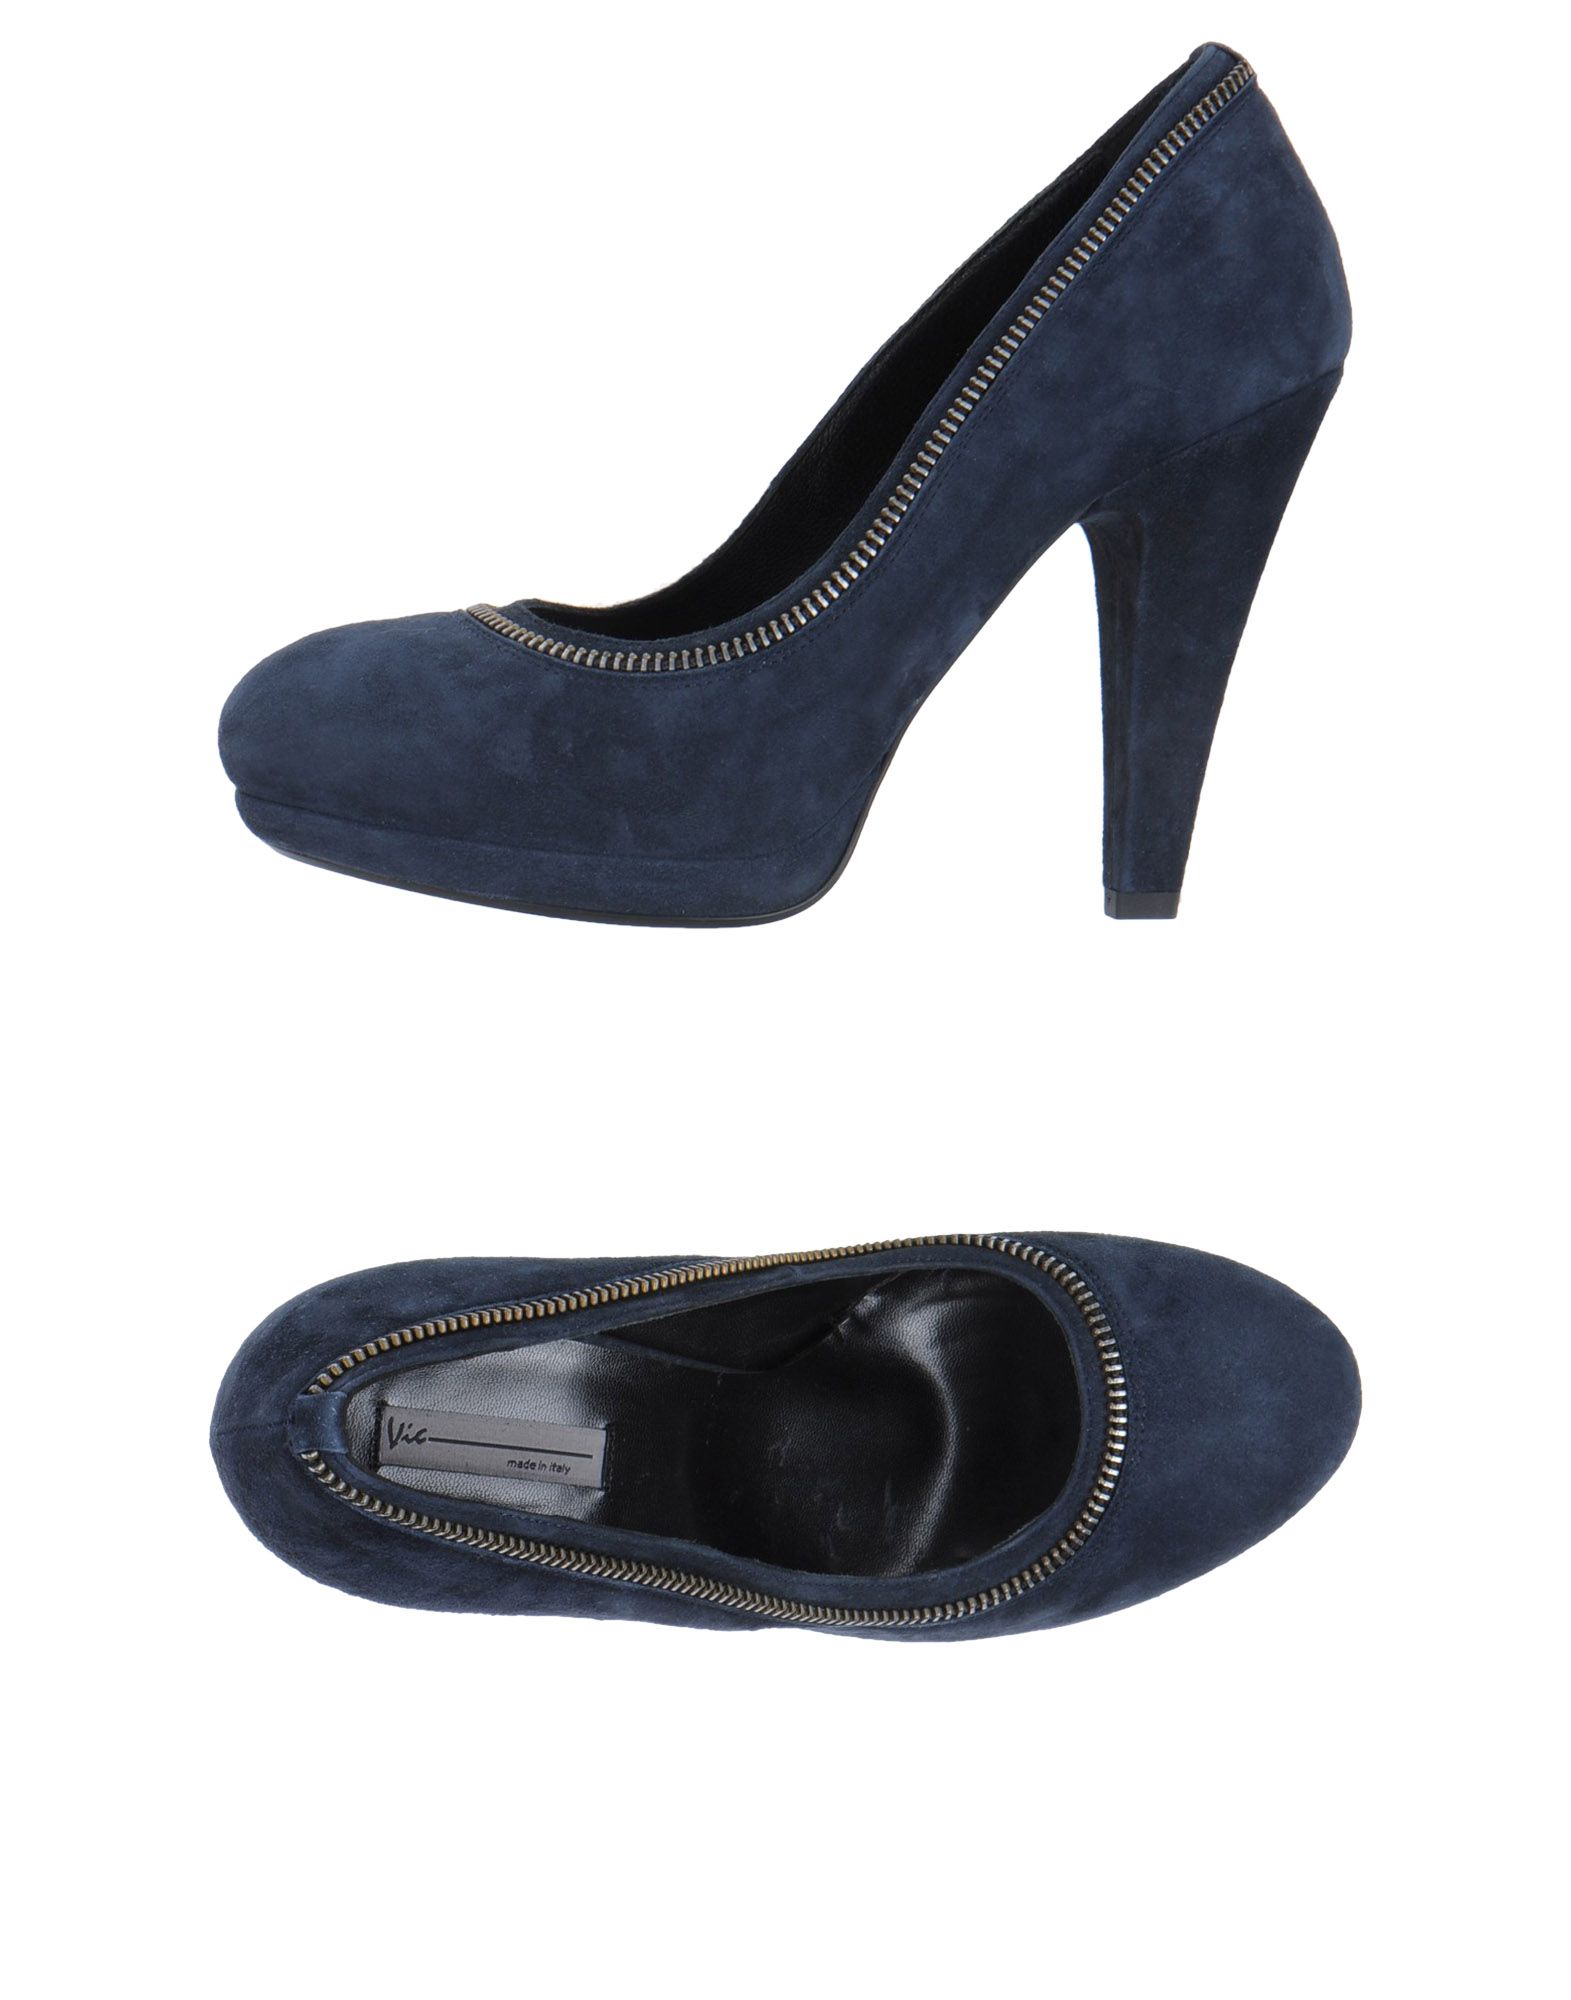 Foto Vic Zapatos De SalóN Plataforma Mujer Azul oscuro